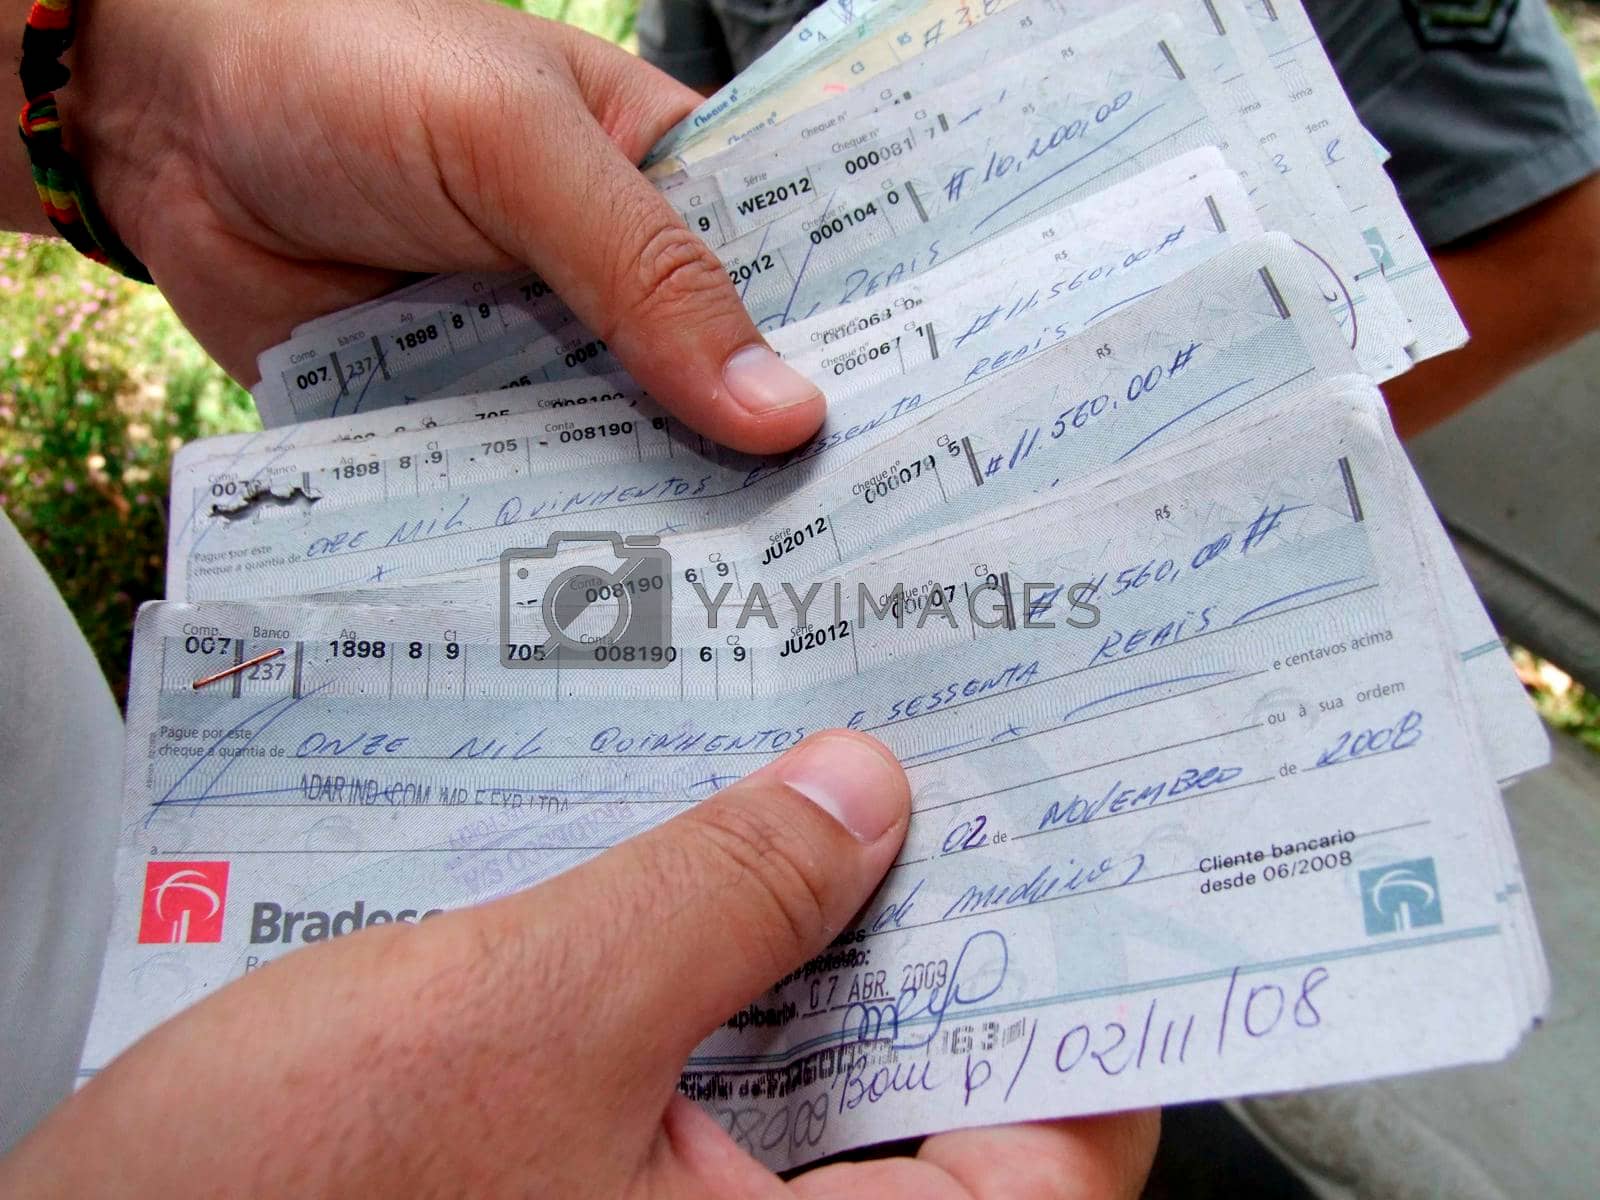 Royalty free image of bad check from bradesco bank by joasouza